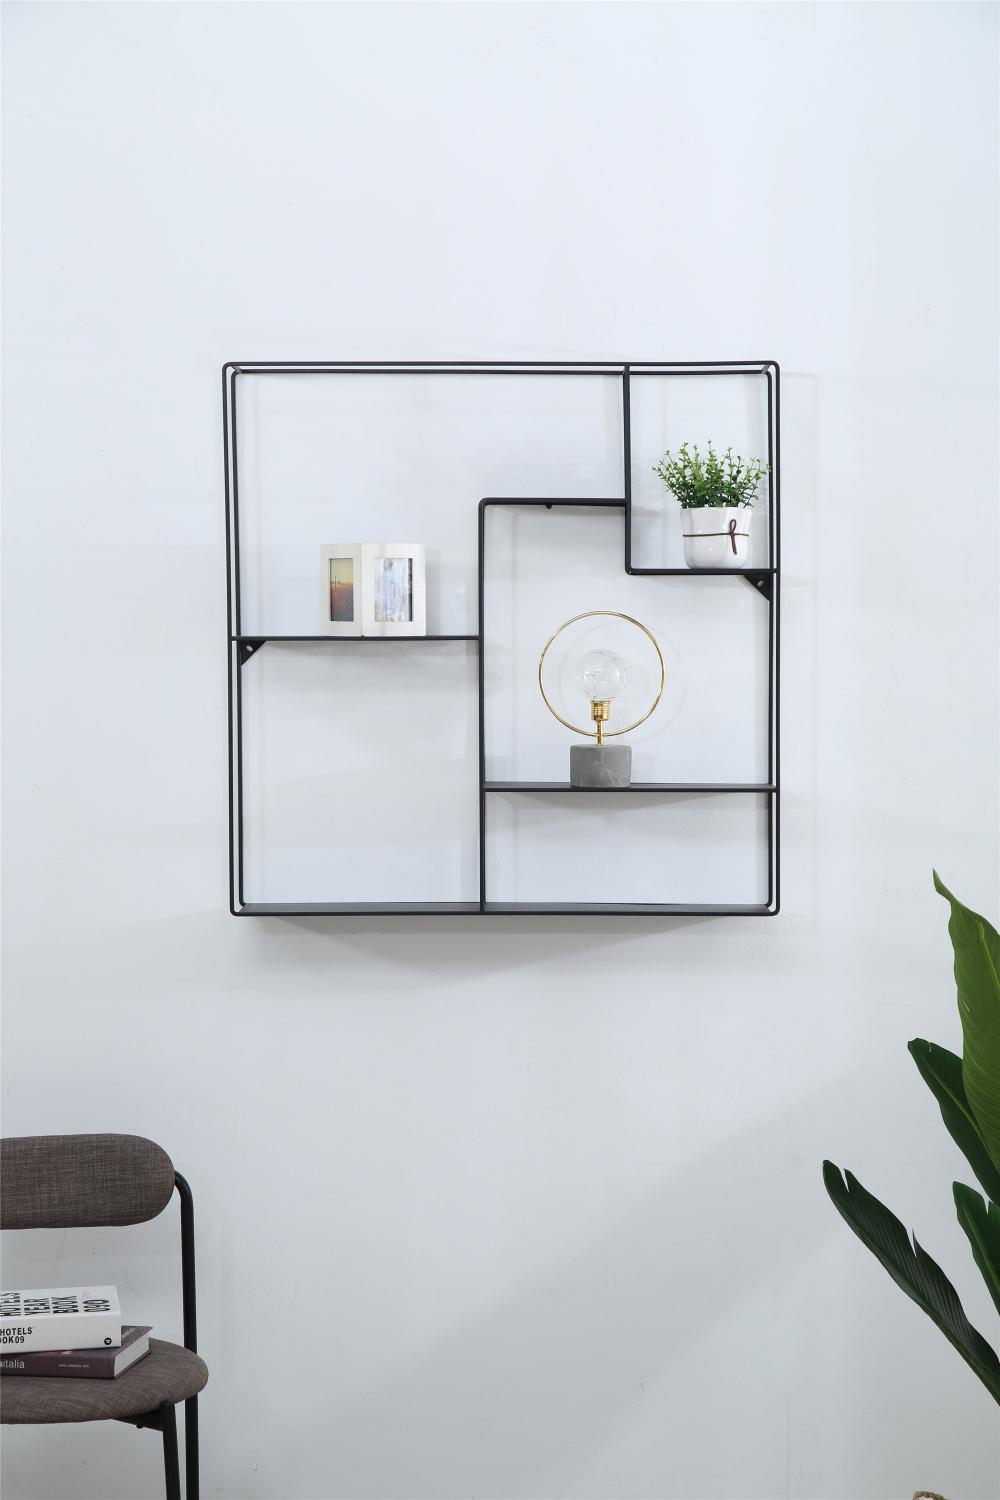 Black wall mounted metal shelf